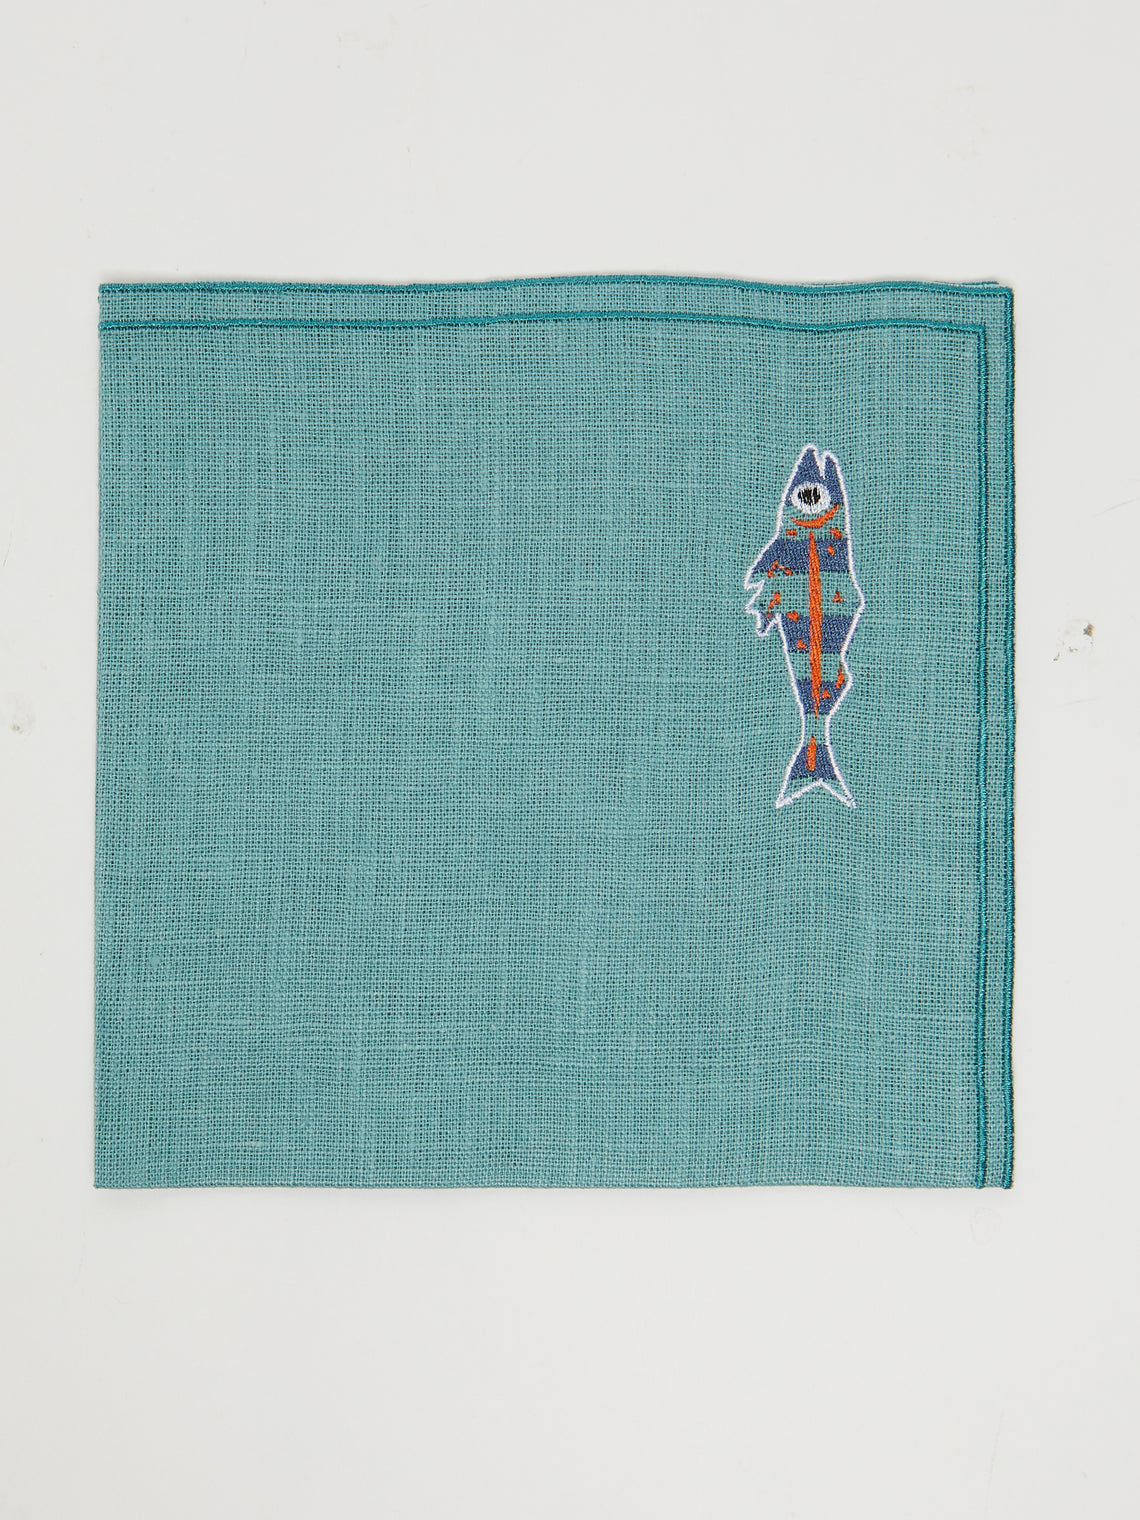 La Gallina Matta - Sardines Embroidered Linen Napkins (Set of 4) -  - ABASK